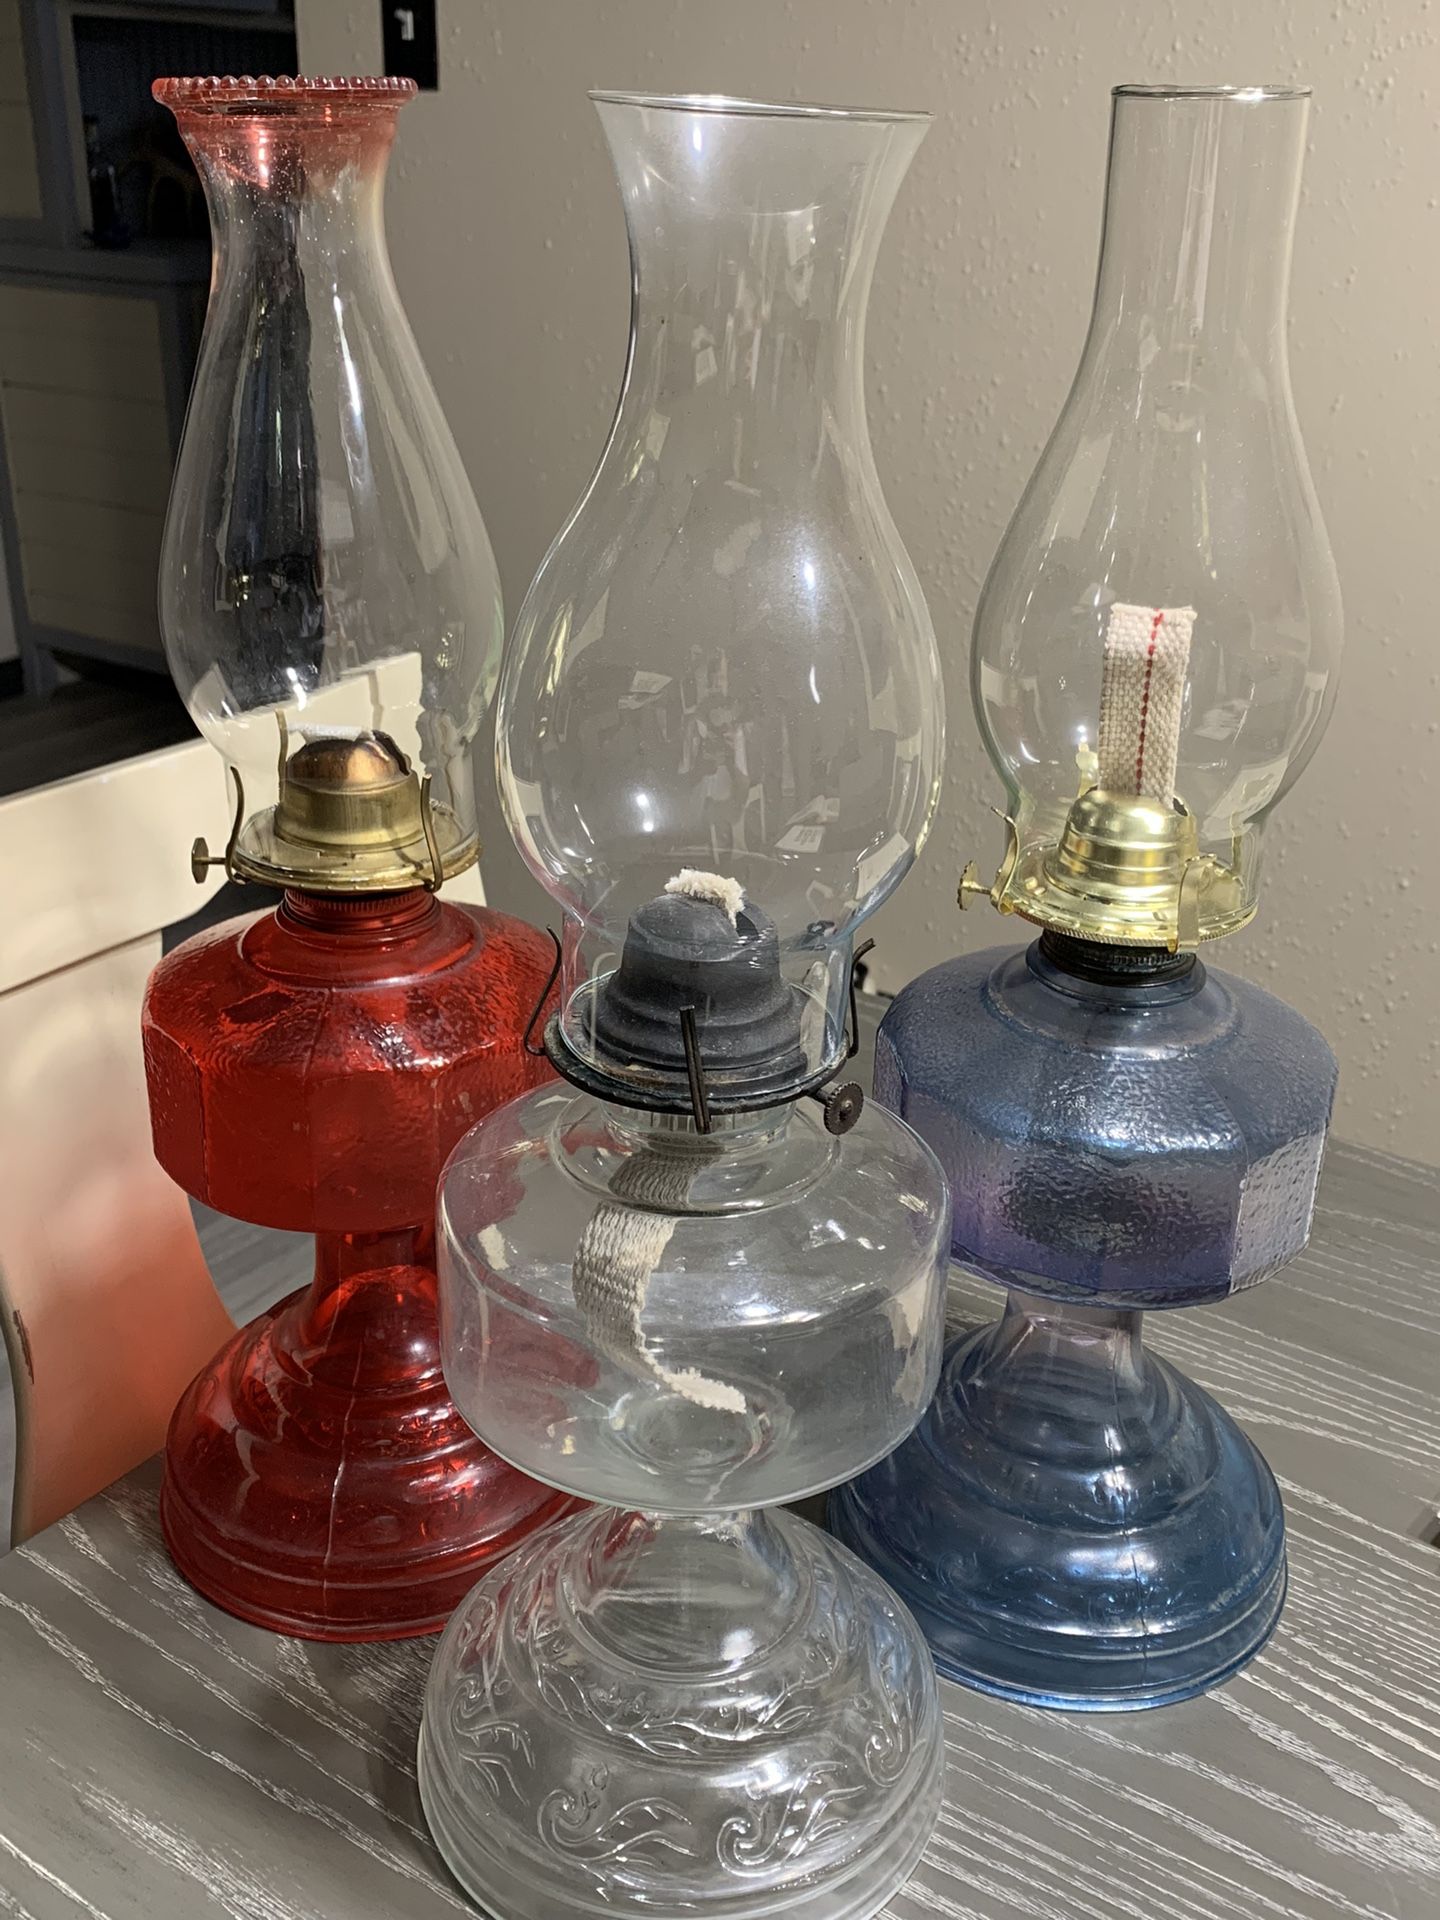 Old Red, White, and Blue Kerosene Lamps